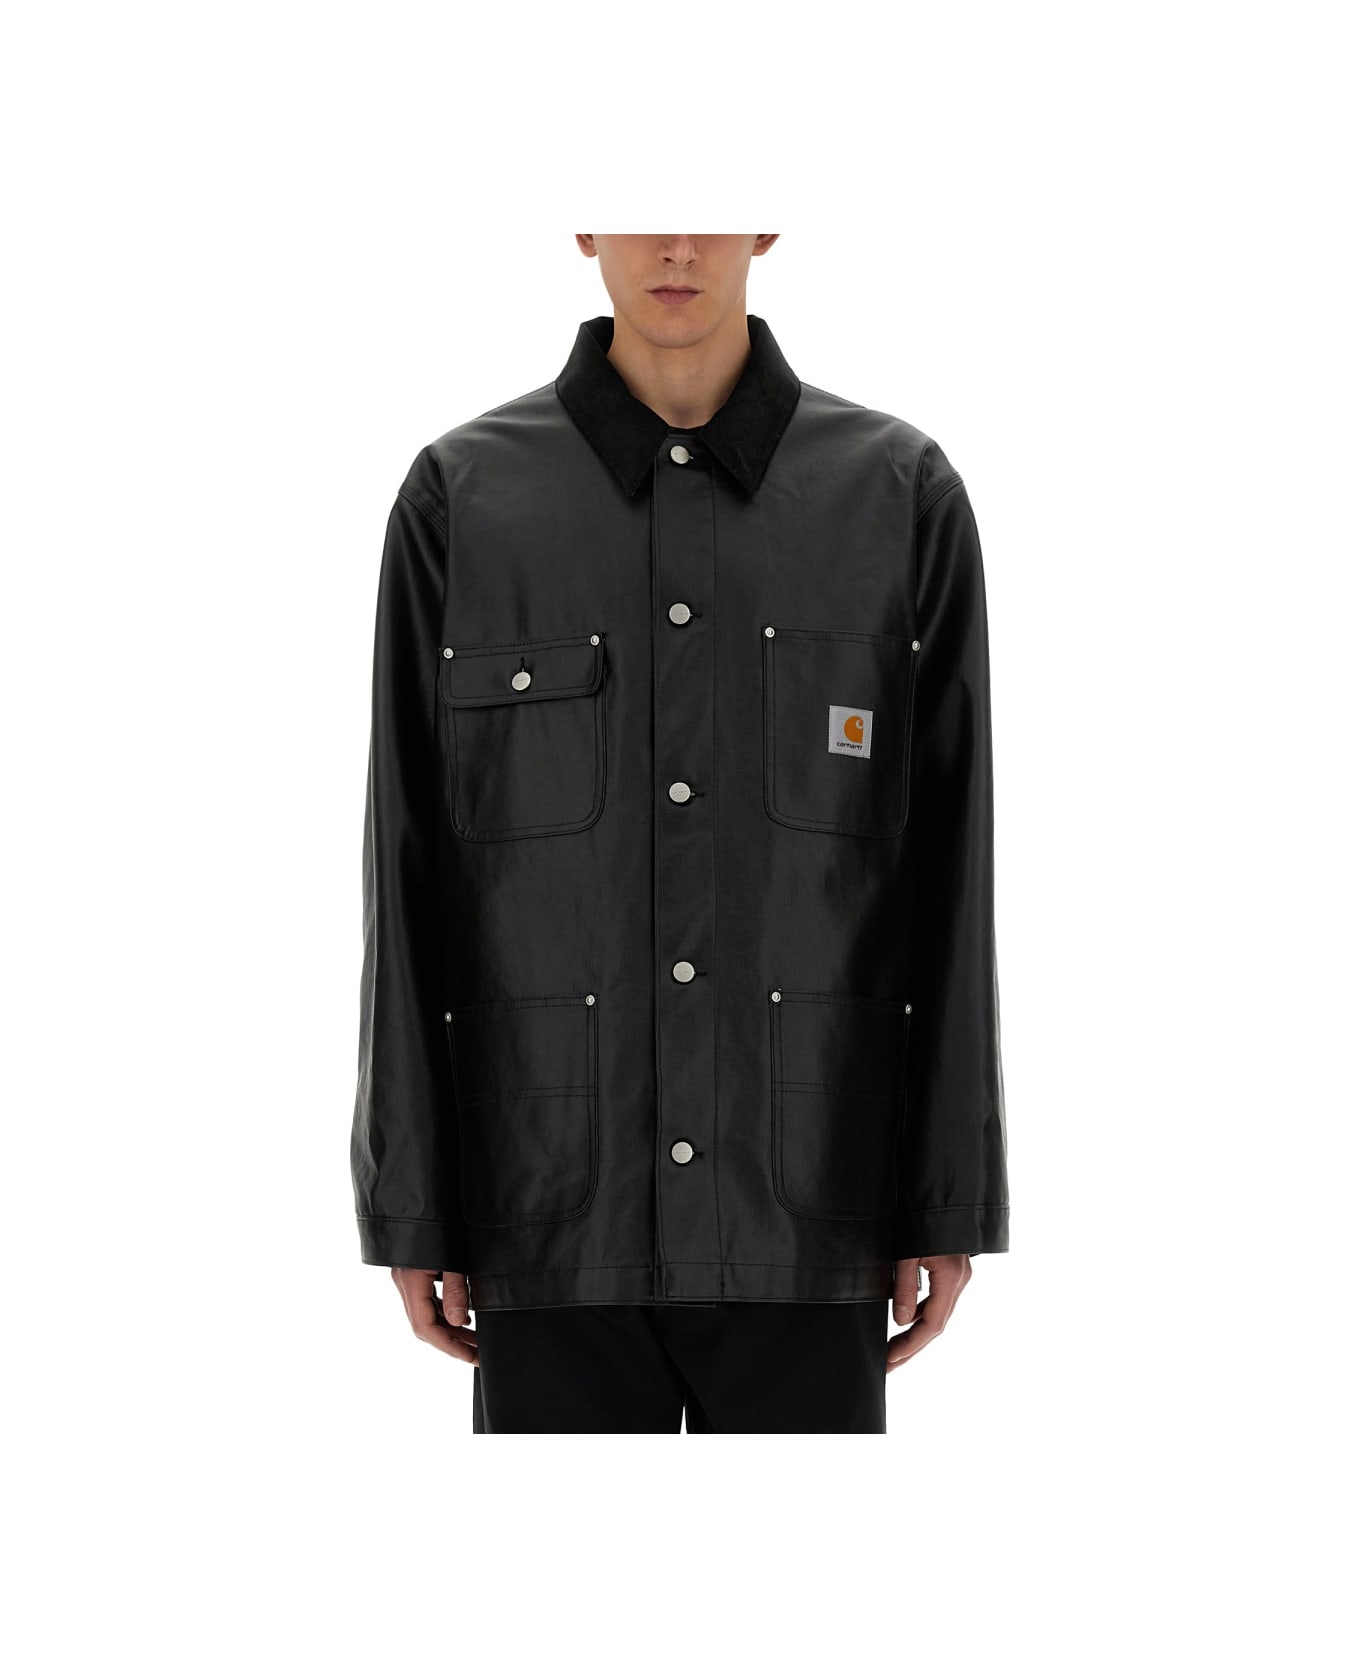 Junya Watanabe Man X Carhartt Jacket - BLACK ジャケット